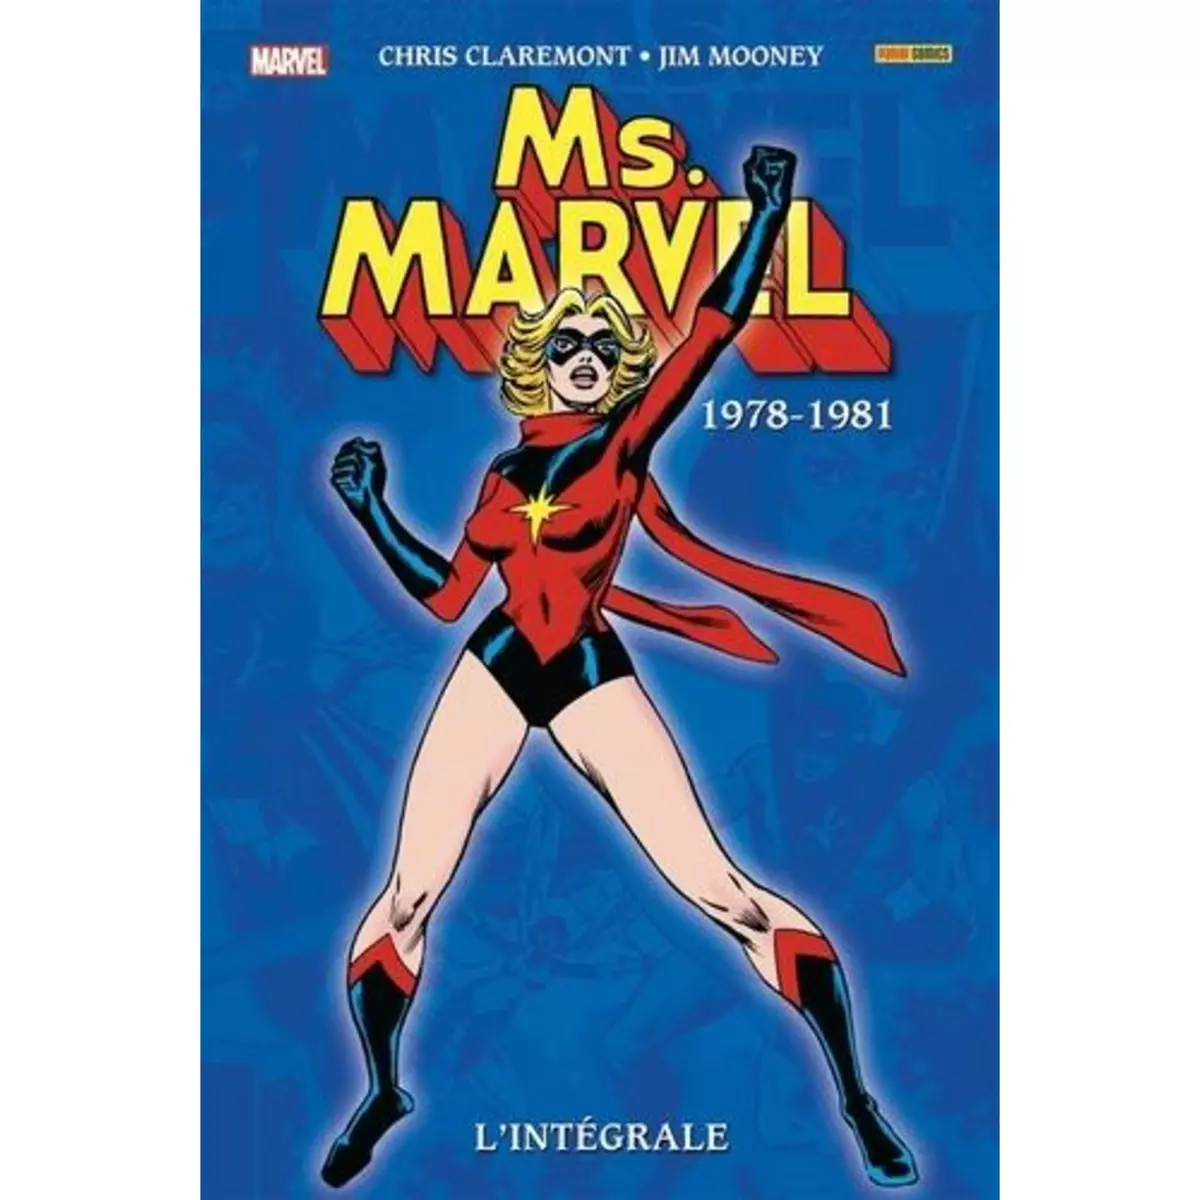  MS. MARVEL L'INTEGRALE : 1978-1981, Claremont Chris